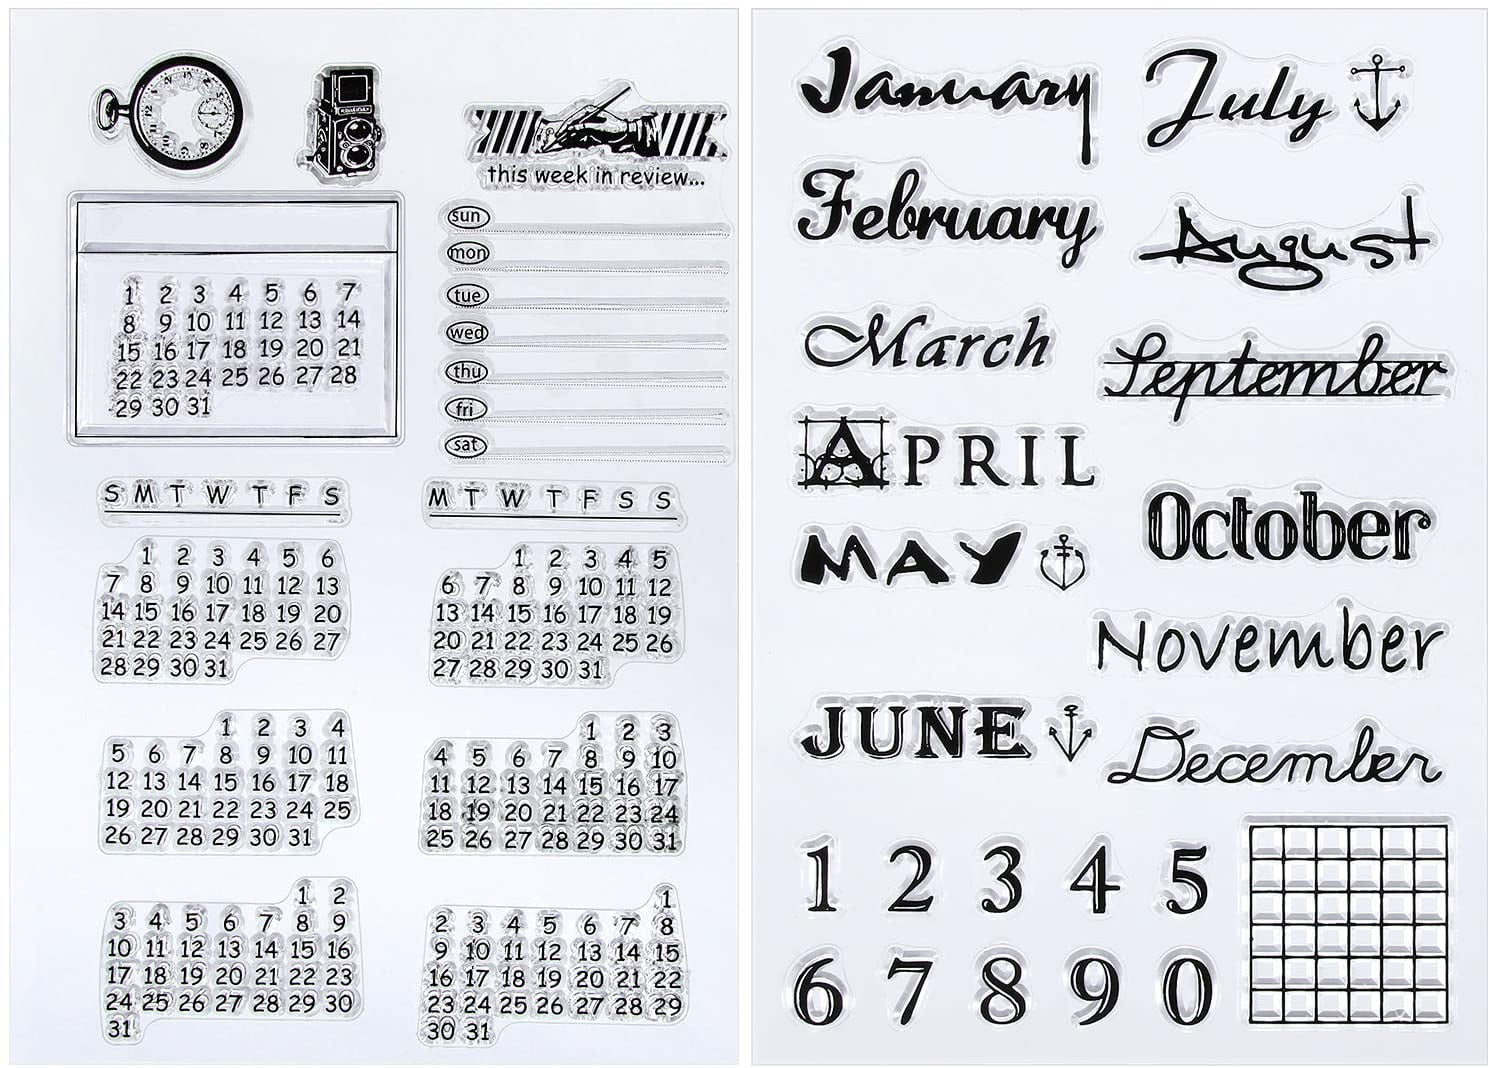 Transparent Silicone Stamp for DIY Card Scrapbooking Making Photo Album Decorative Calendar Pattern Clear Stamp